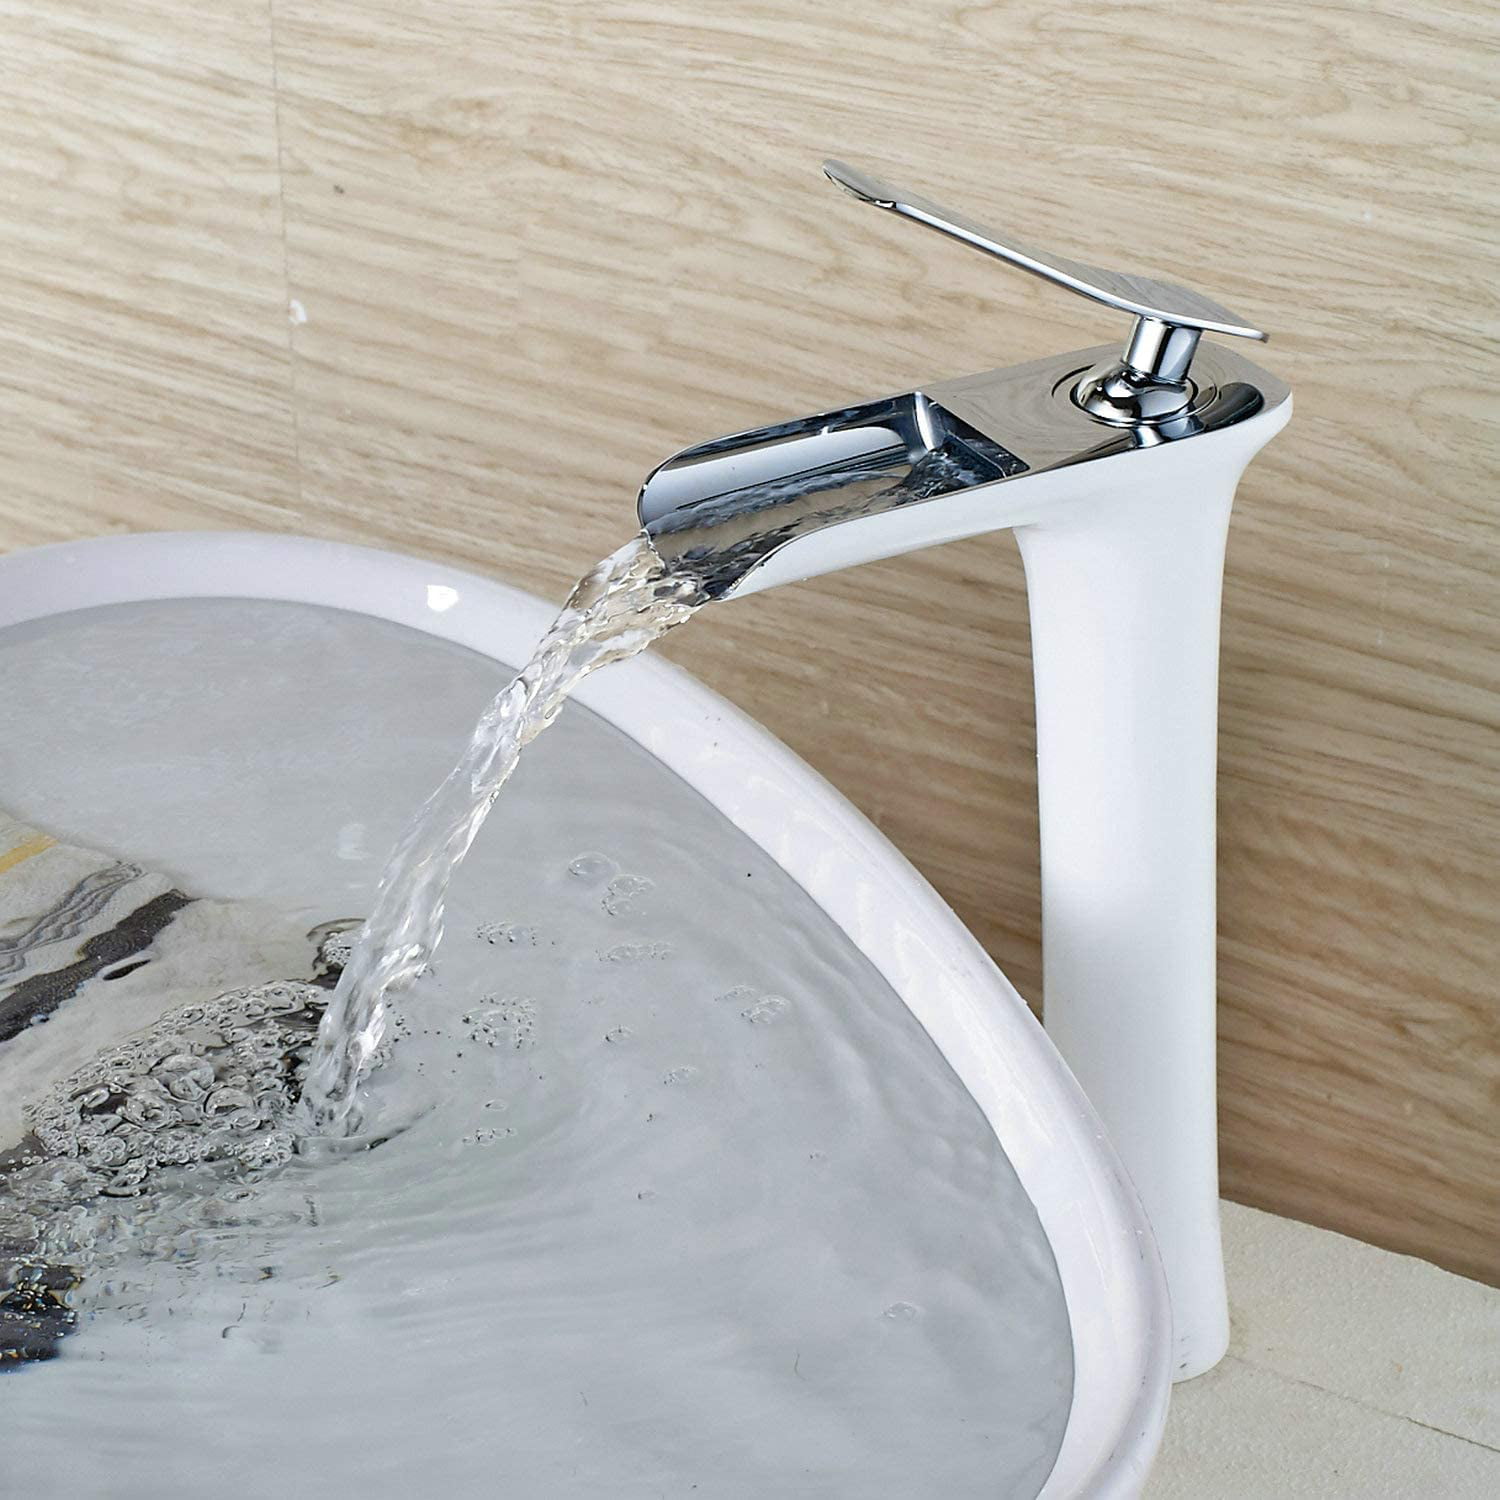 Chrome Waterfall Bathroom Sink Faucet Single Handle Basin Vessel Mixer Tap Tall 